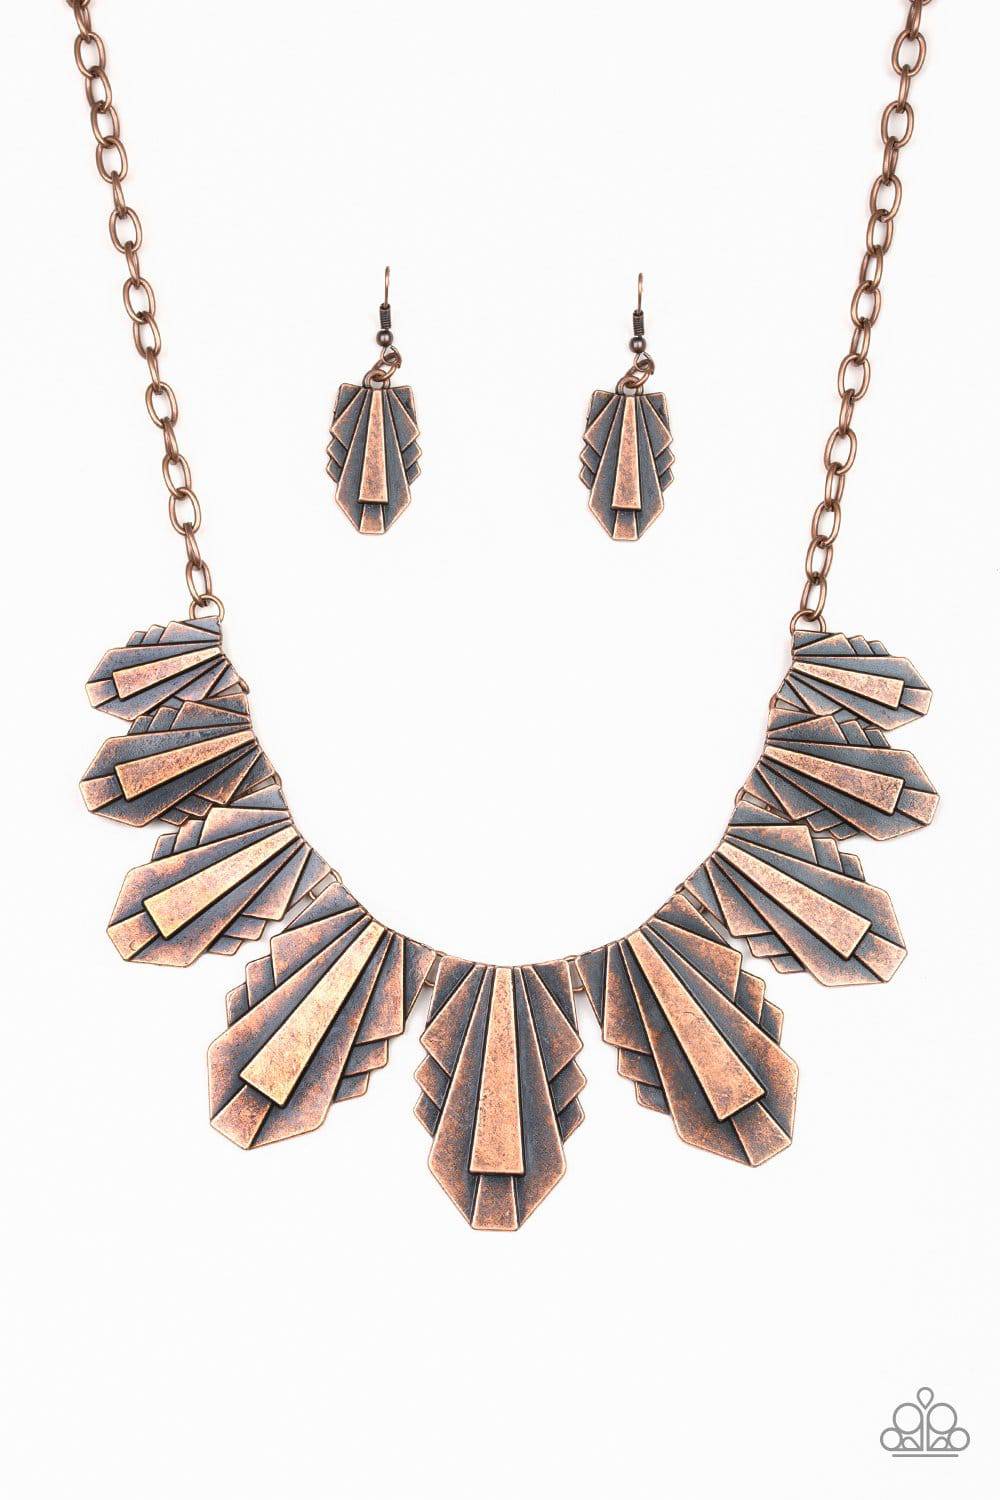 Cougar Cave - Copper Necklace - Paparazzi Accessories - GlaMarous Titi Jewels